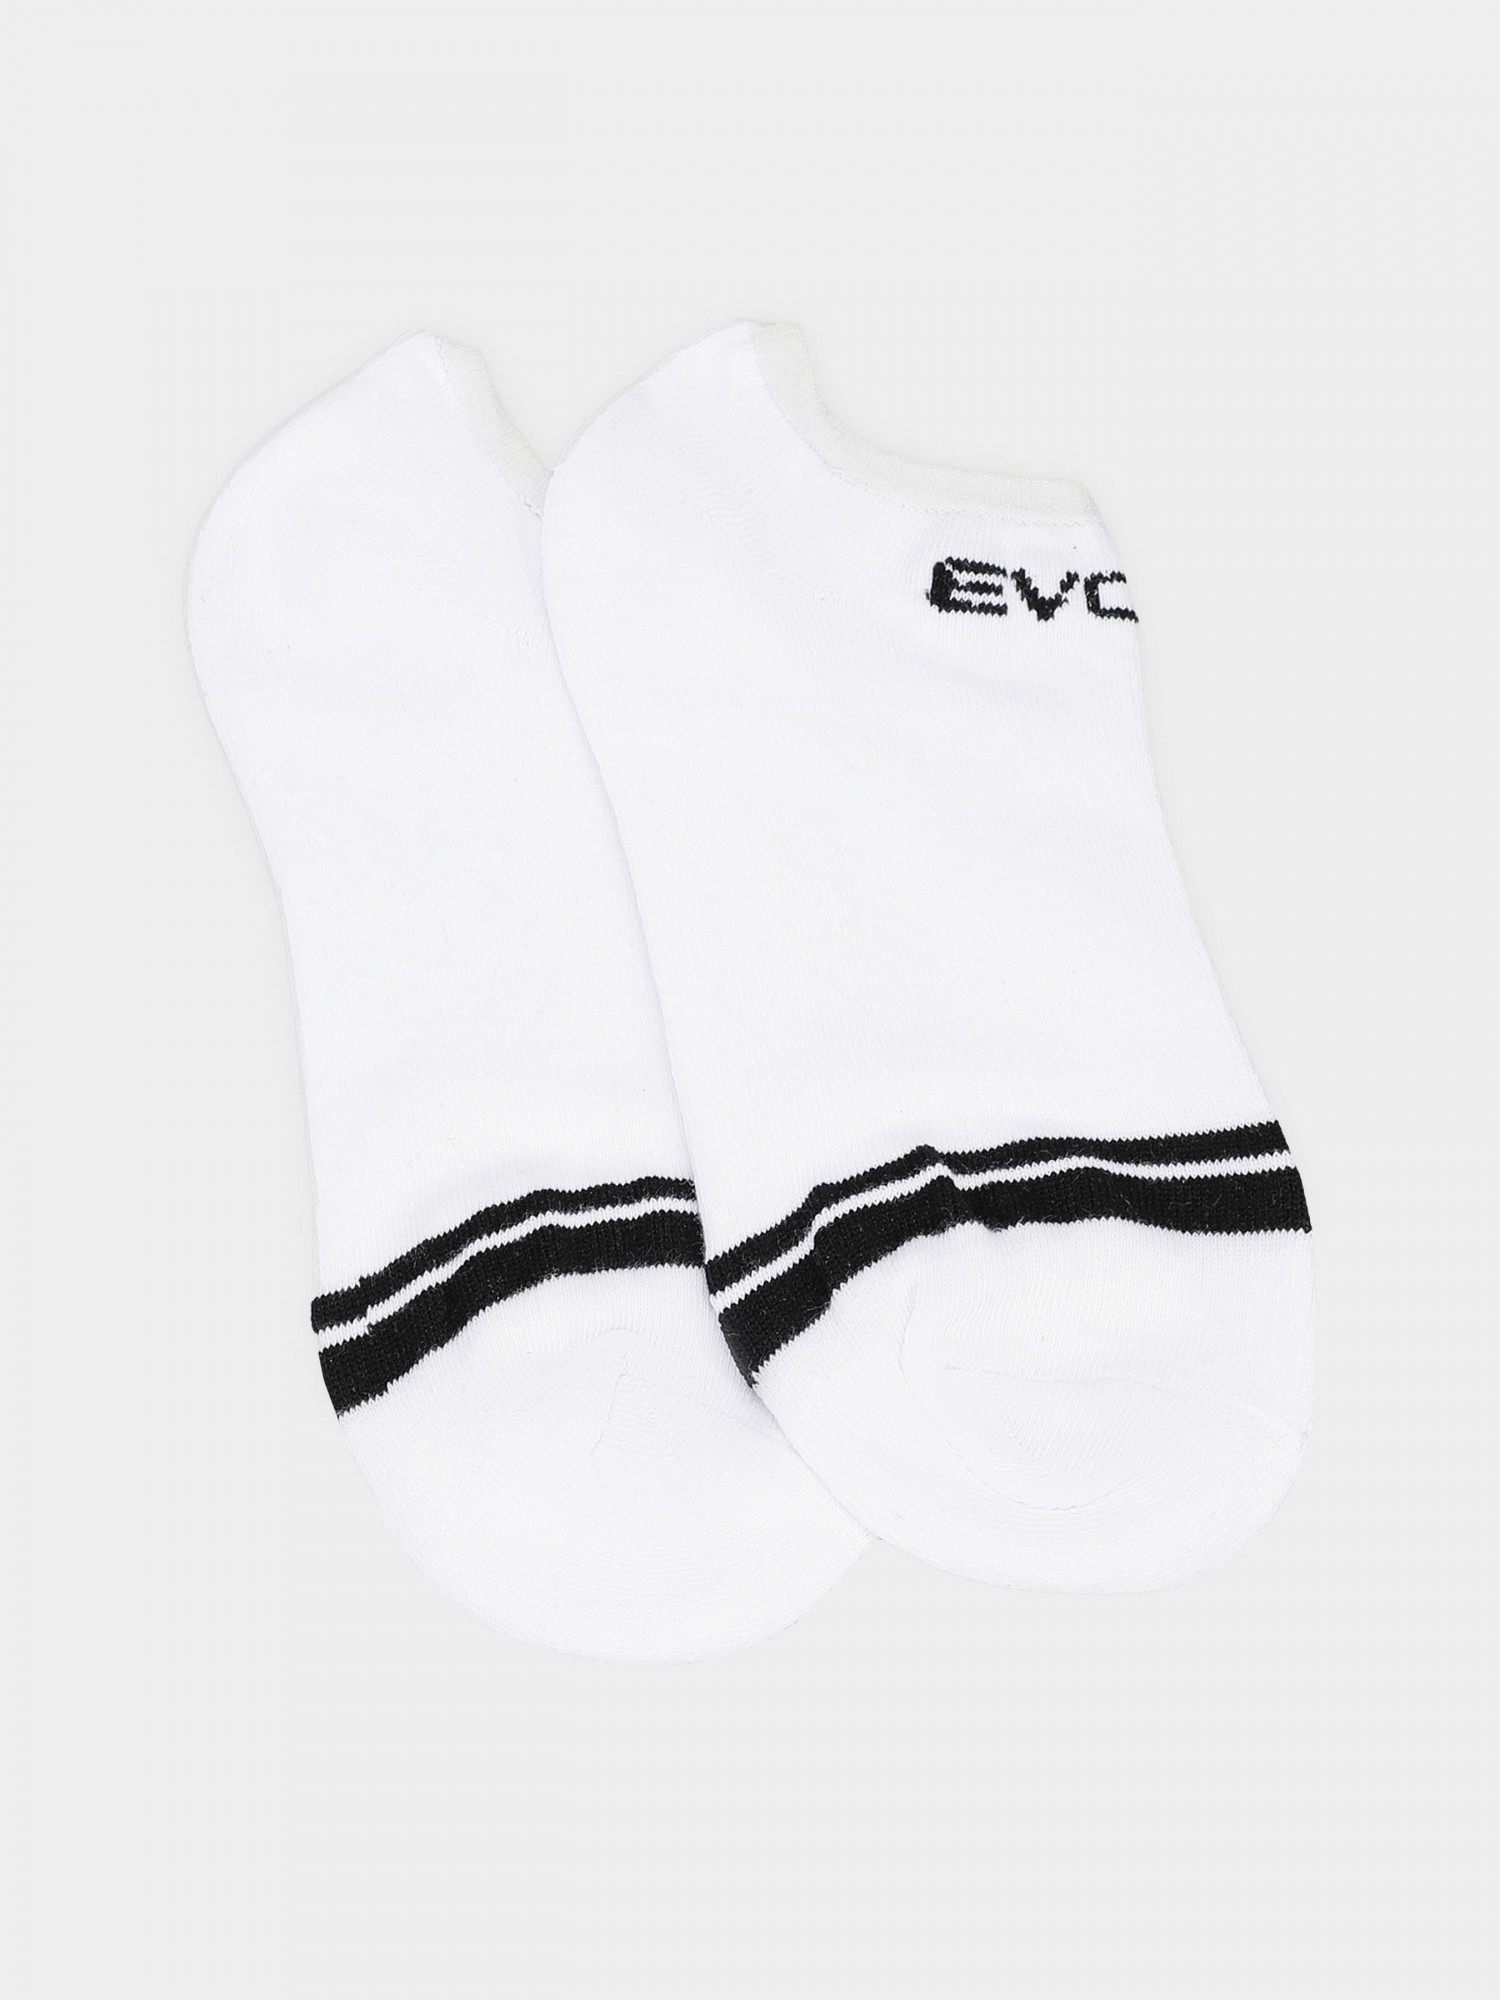 Шкарпетки Evoids Condor білі 888001-100 изображение 2